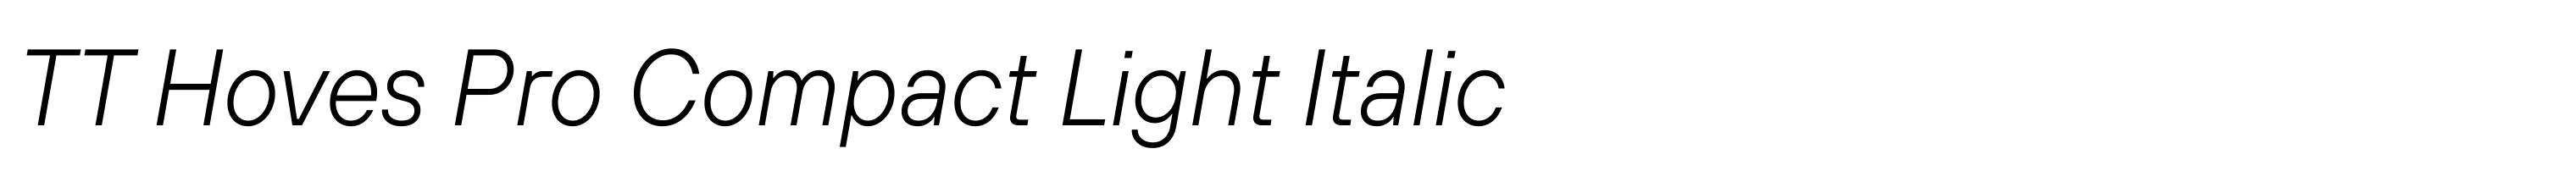 TT Hoves Pro Compact Light Italic